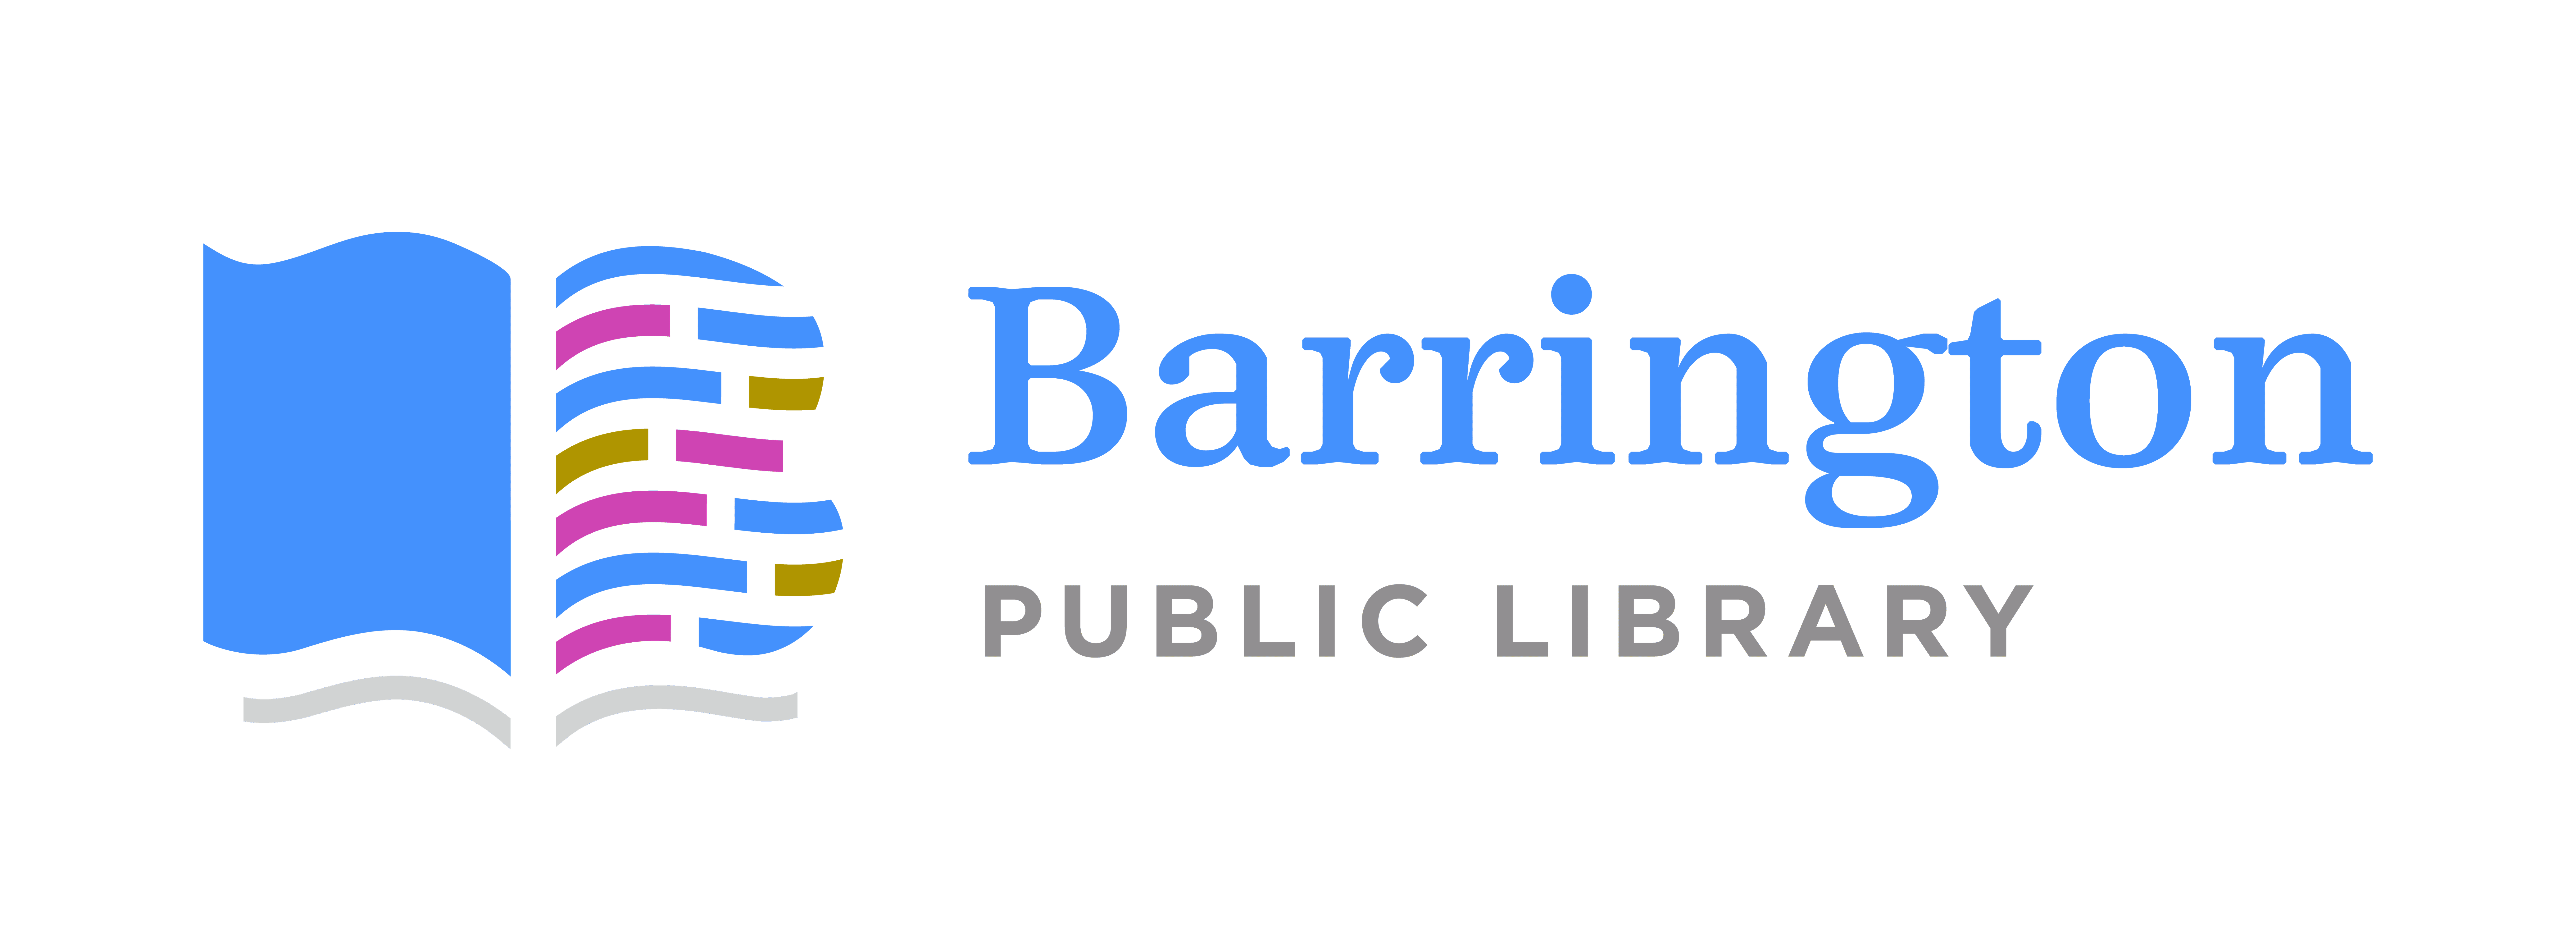 Barrington Public Library logo